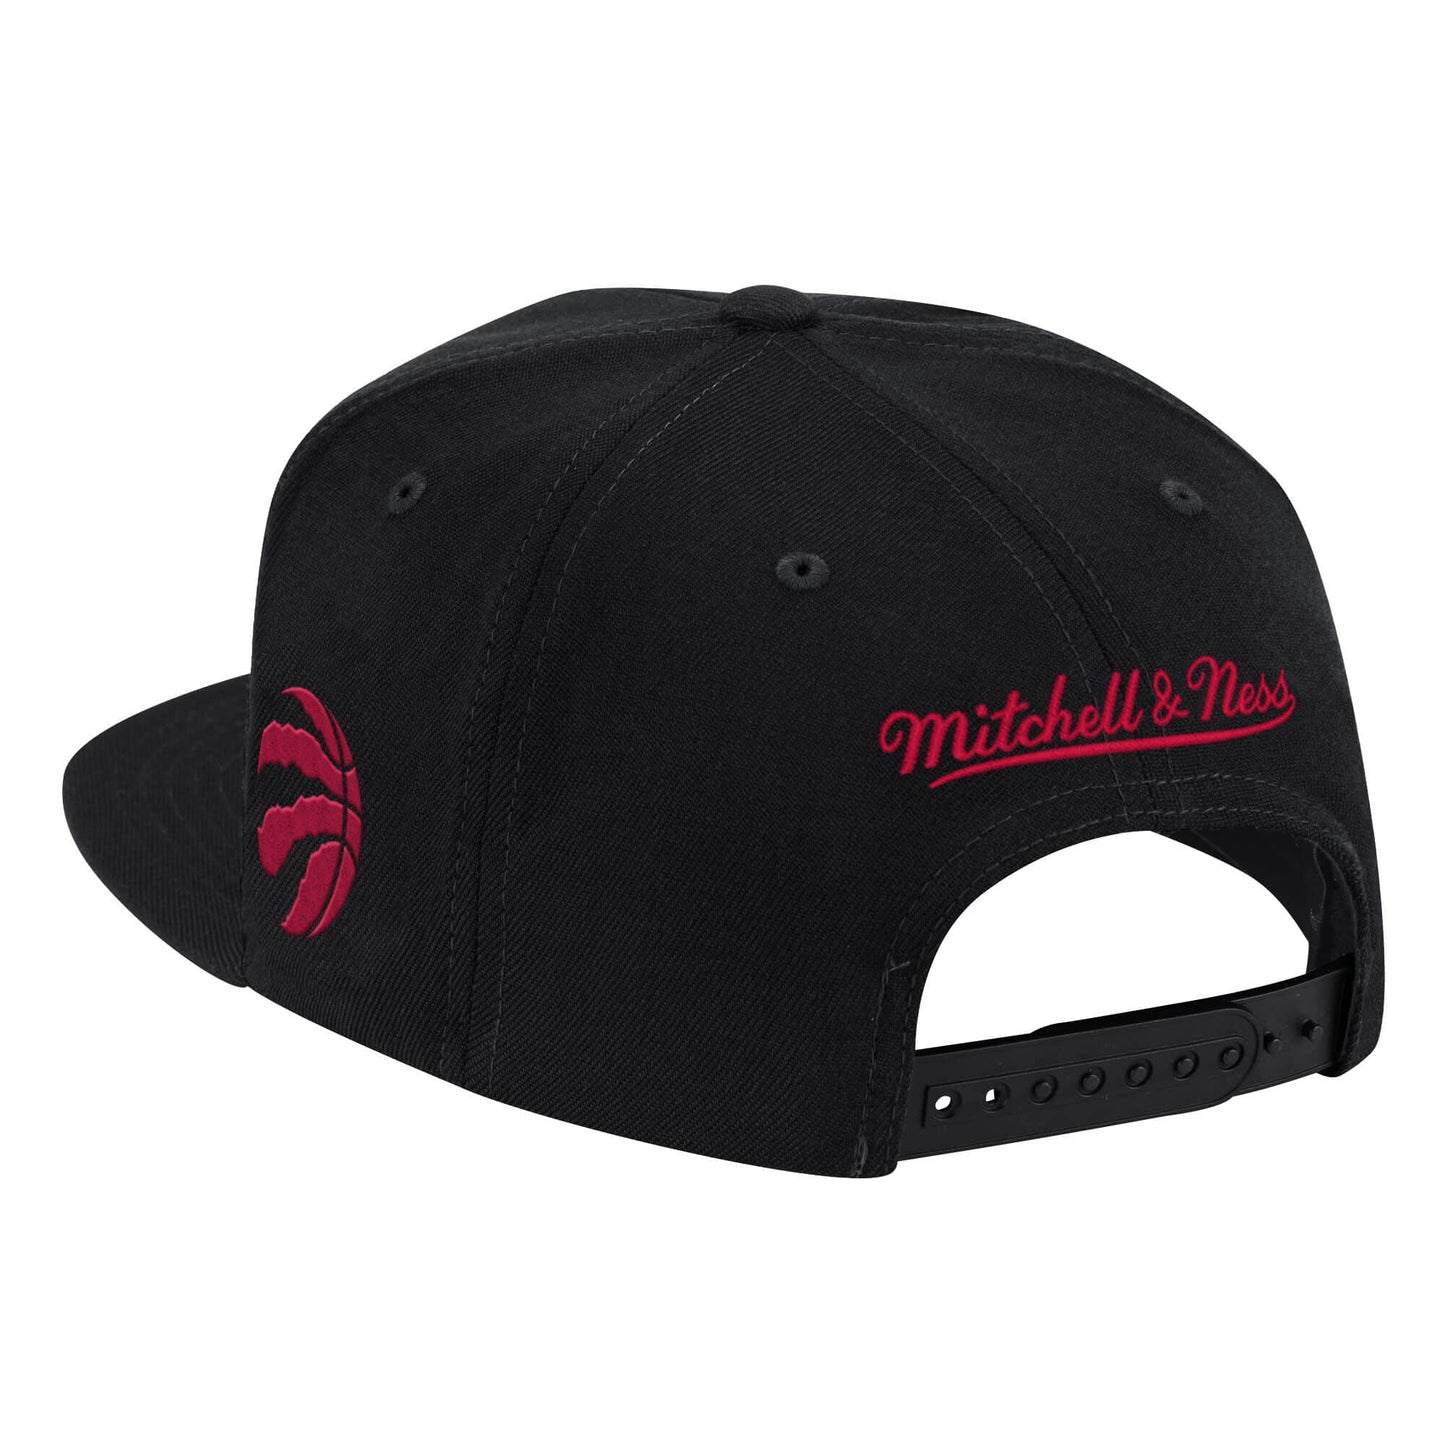 Mens NBA Toronto Raptors Black Foundation Script Snapback Hat By Mitchell And Ness